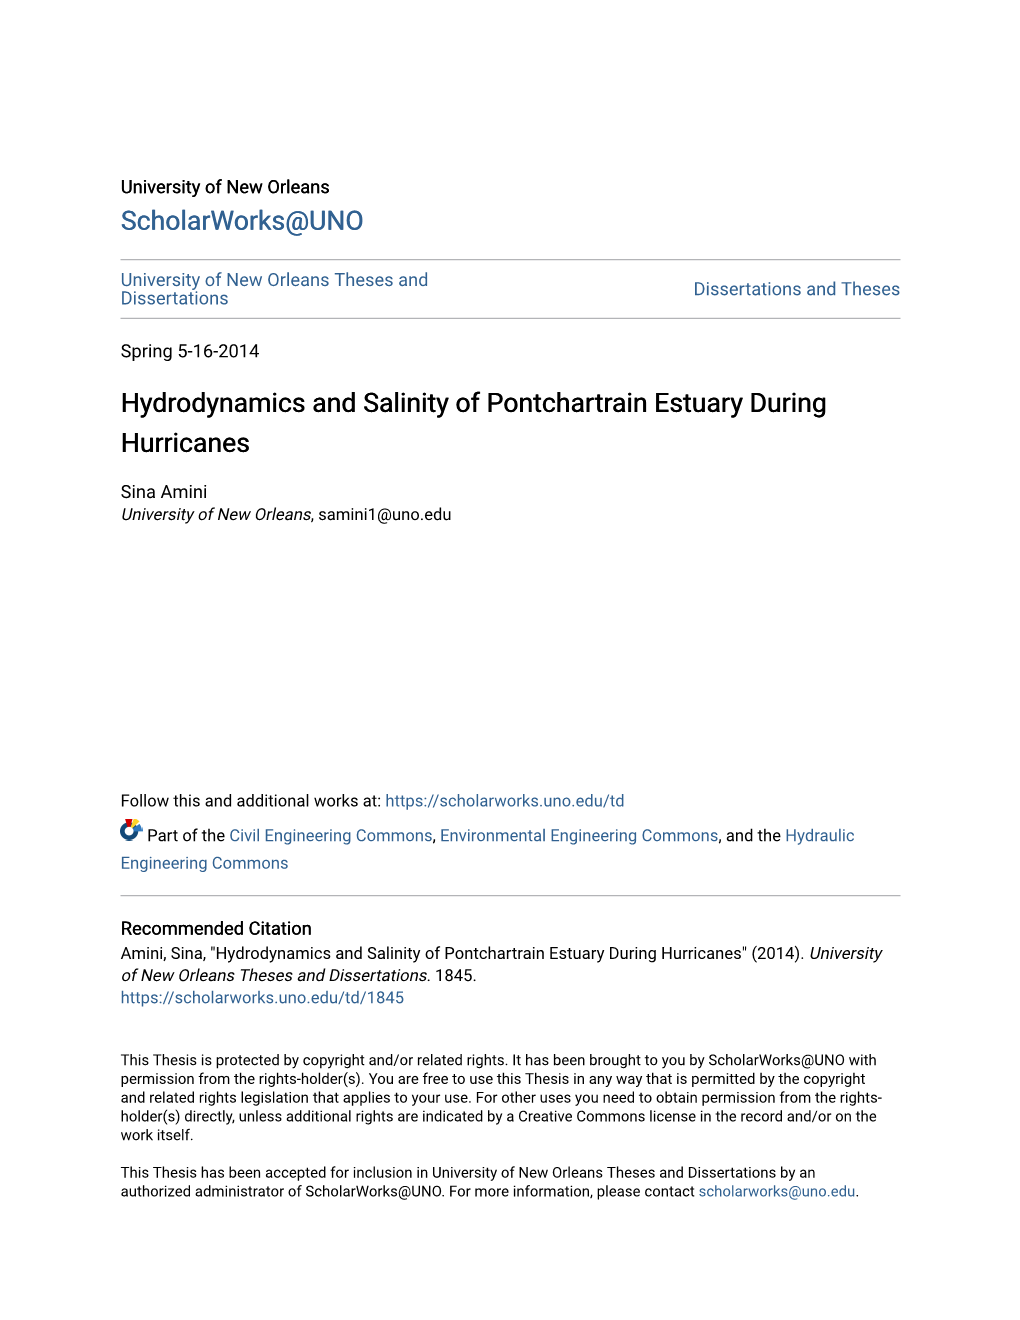 Hydrodynamics and Salinity of Pontchartrain Estuary During Hurricanes